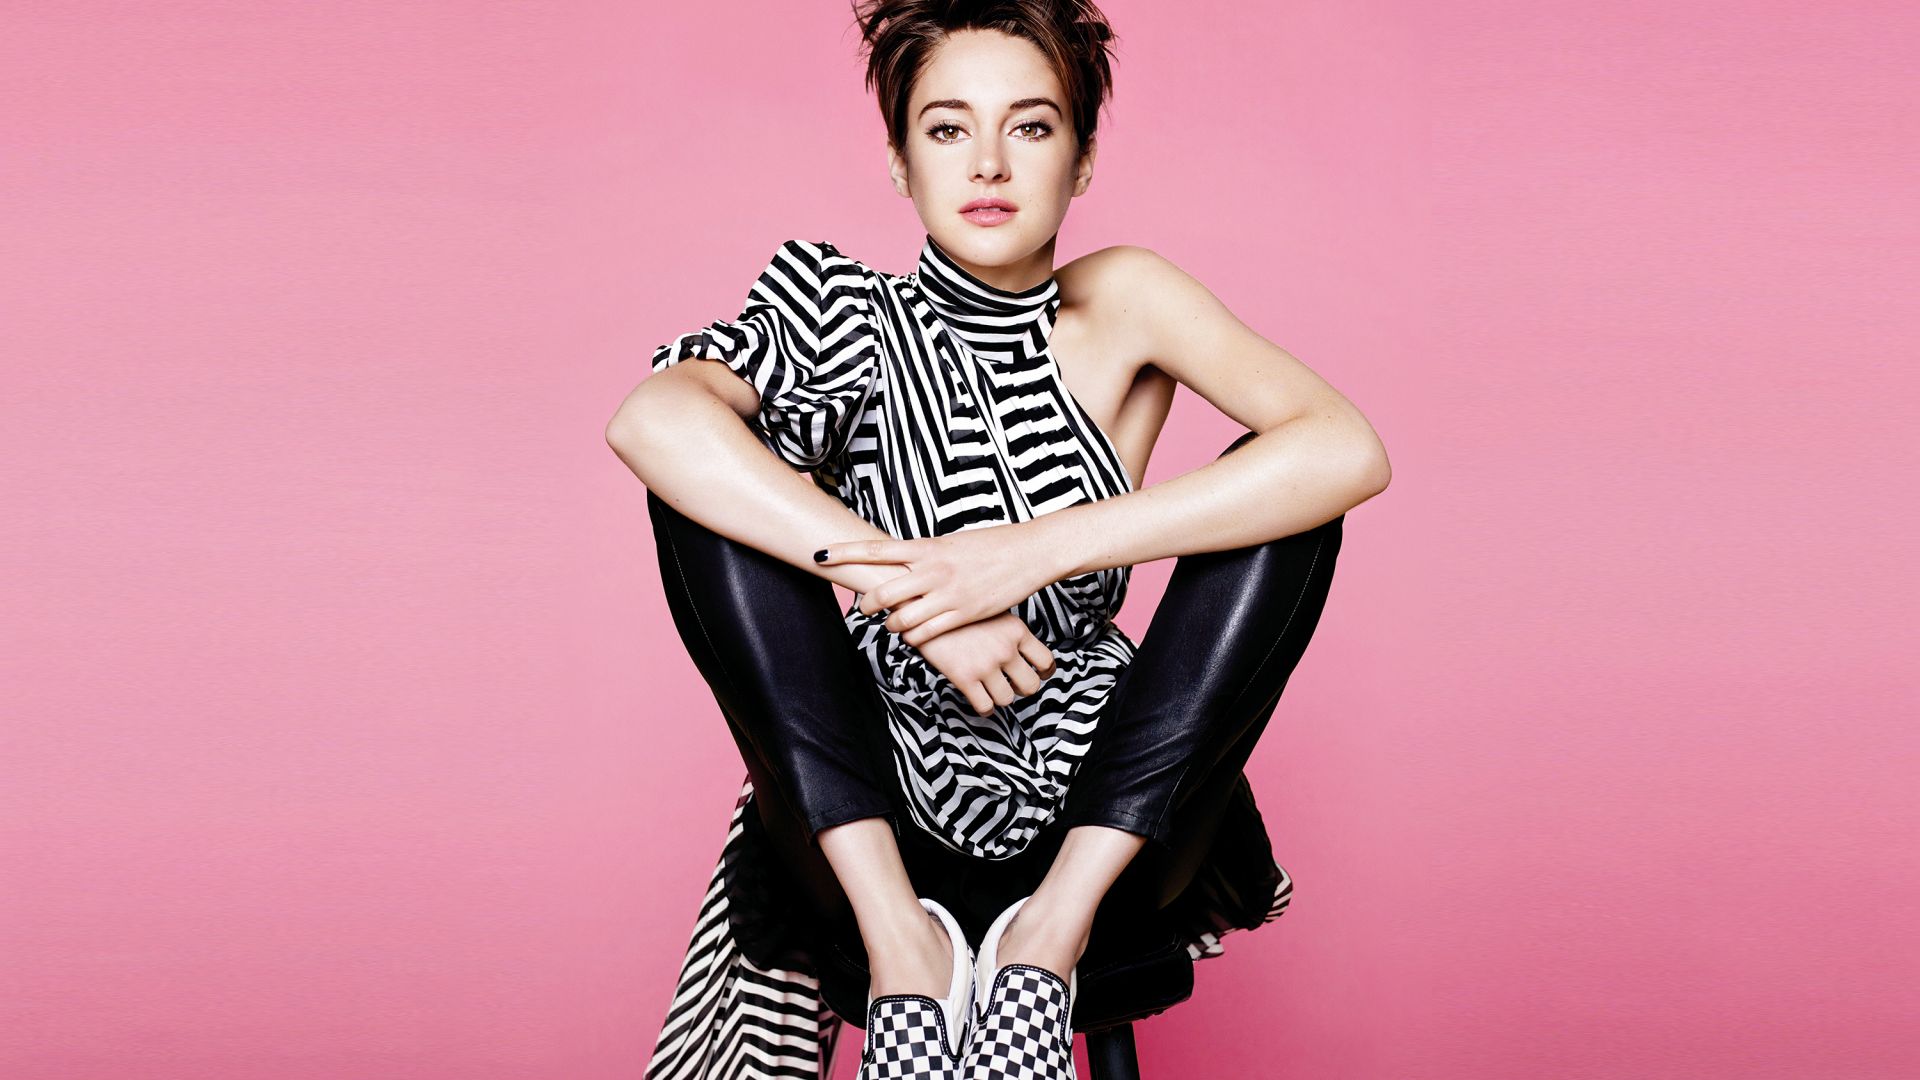 Shailene Woodley, Most popular celebs, actress, model (horizontal)